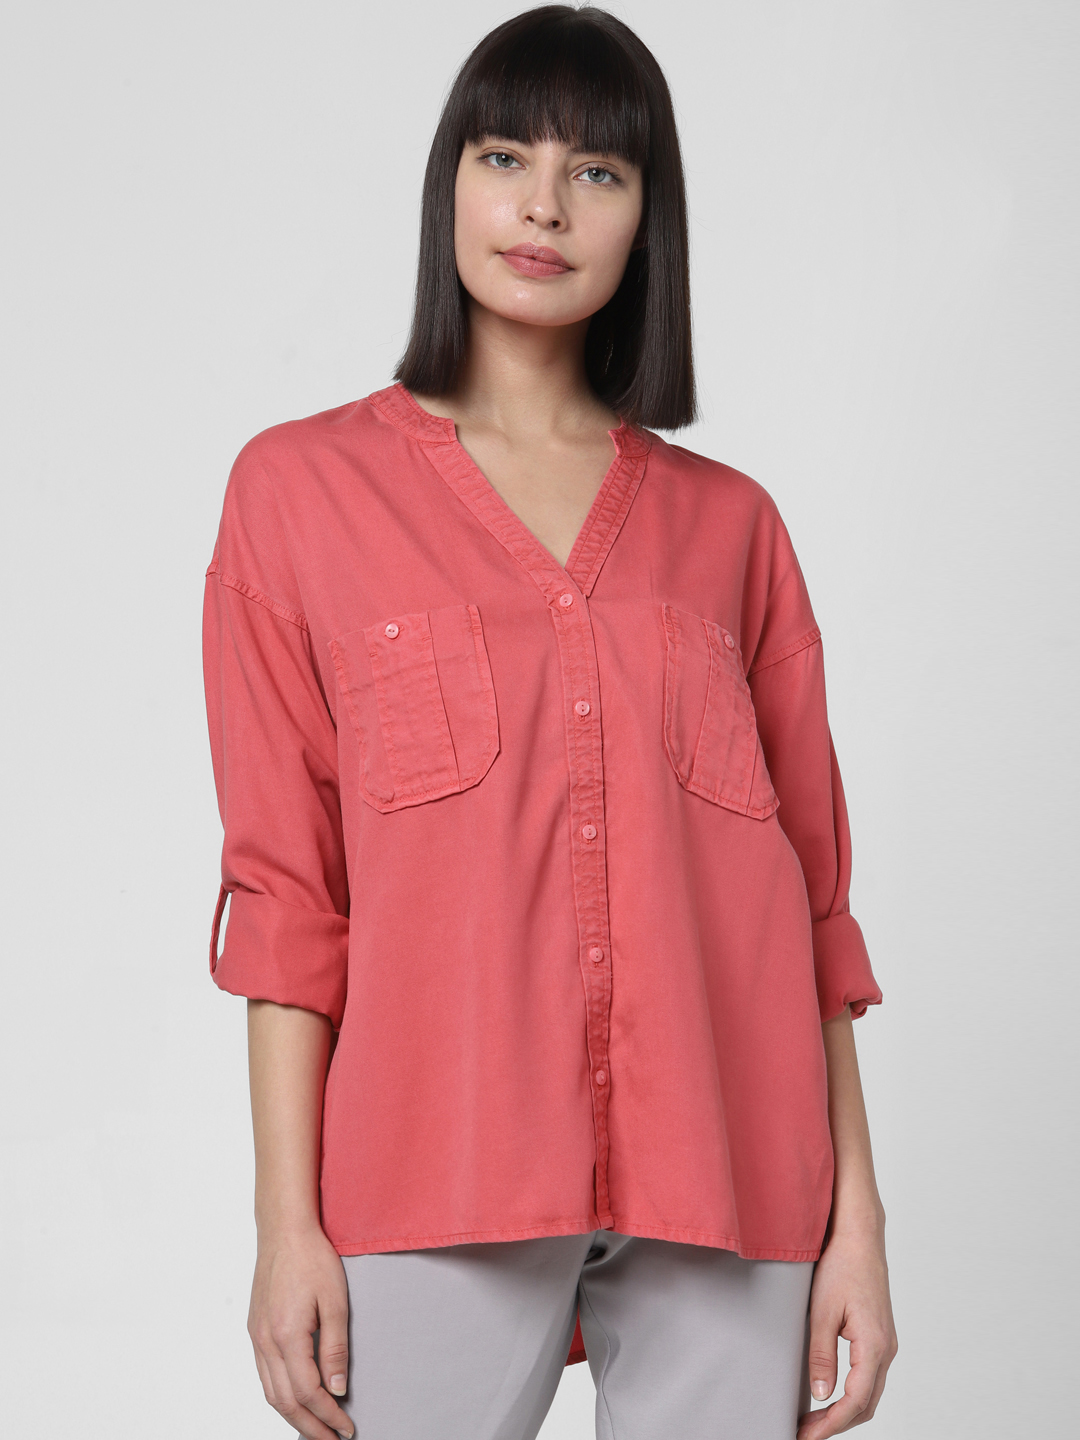 Vero Moda Women Pink Regular Fit Solid Casual Shirt Price in India